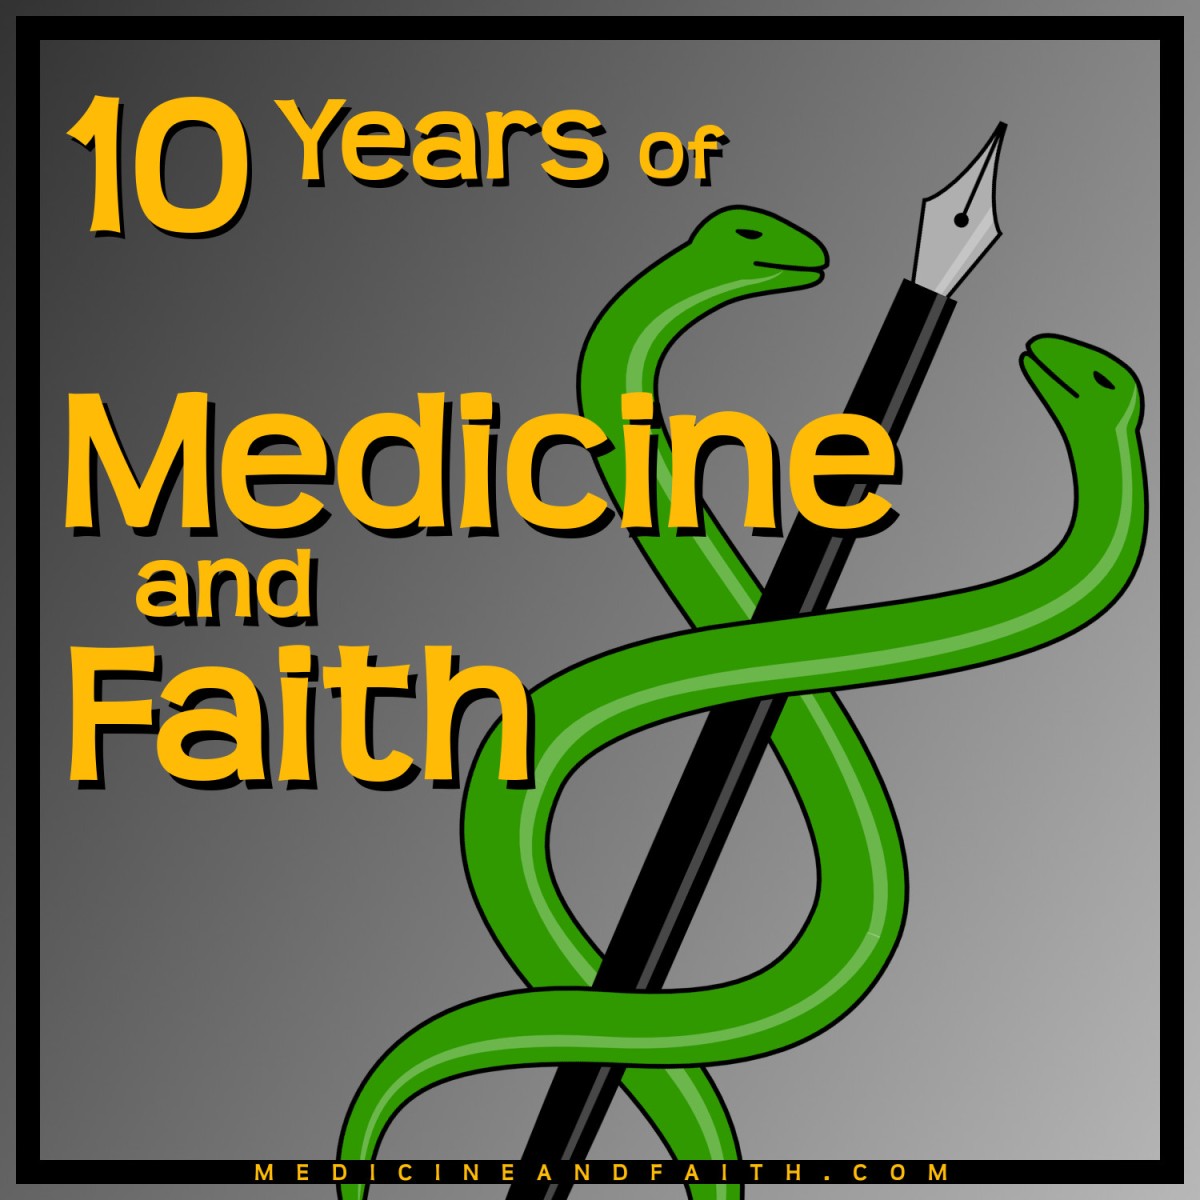 Ten Years of Medicine and Faith